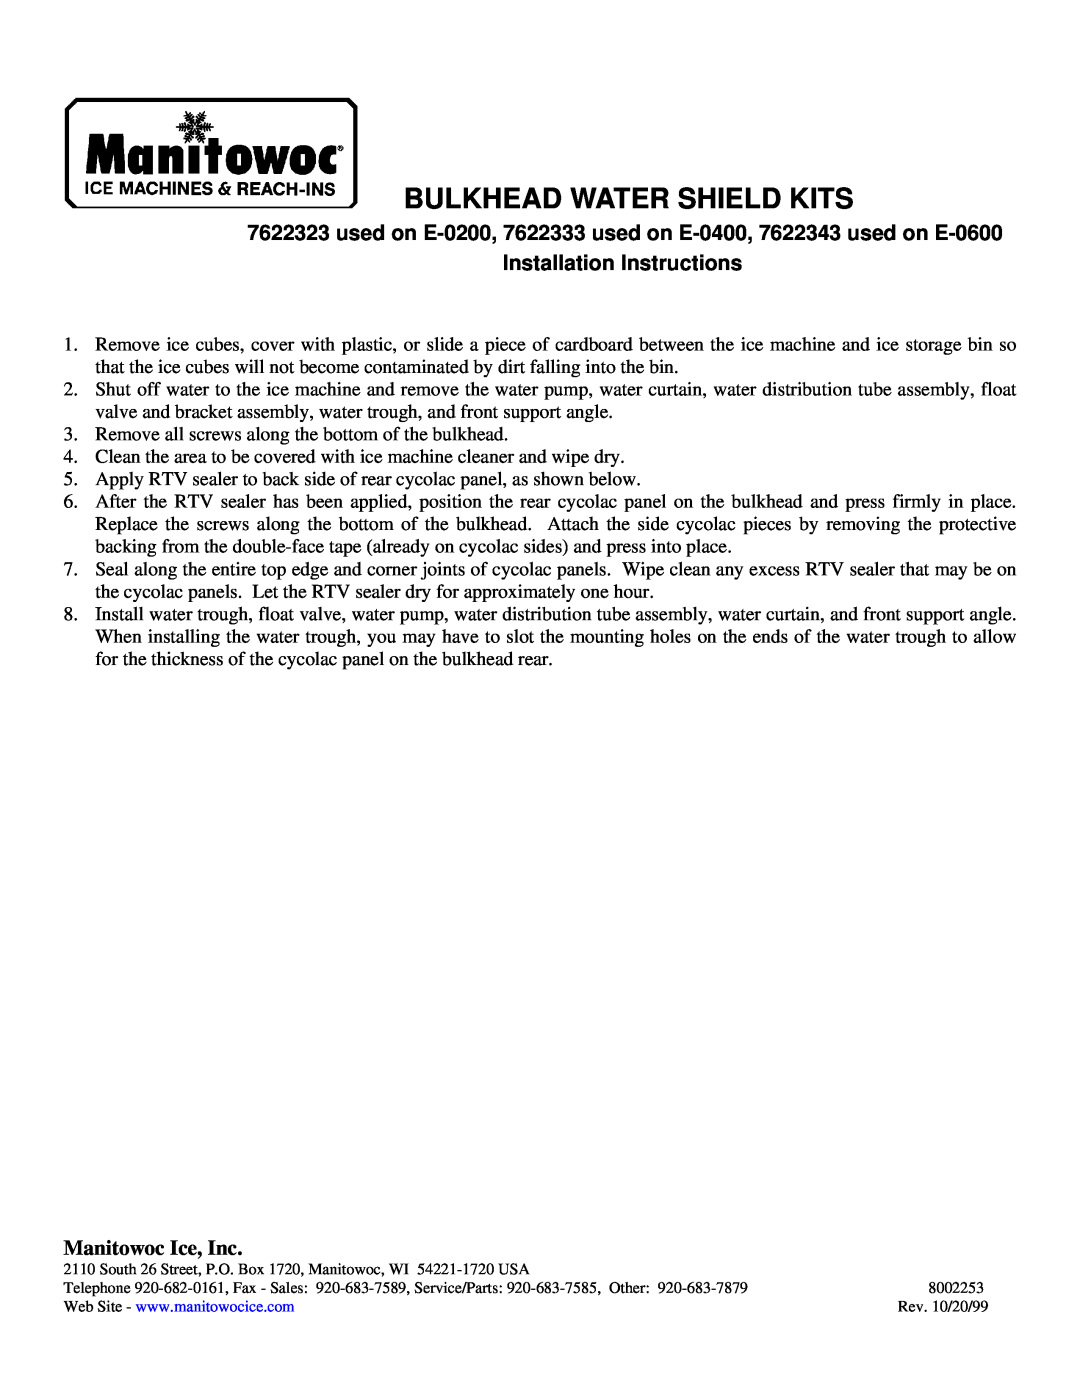 Manitowoc Ice 7622343 installation instructions Bulkhead Water Shield Kits, Installation Instructions, Manitowoc Ice, Inc 